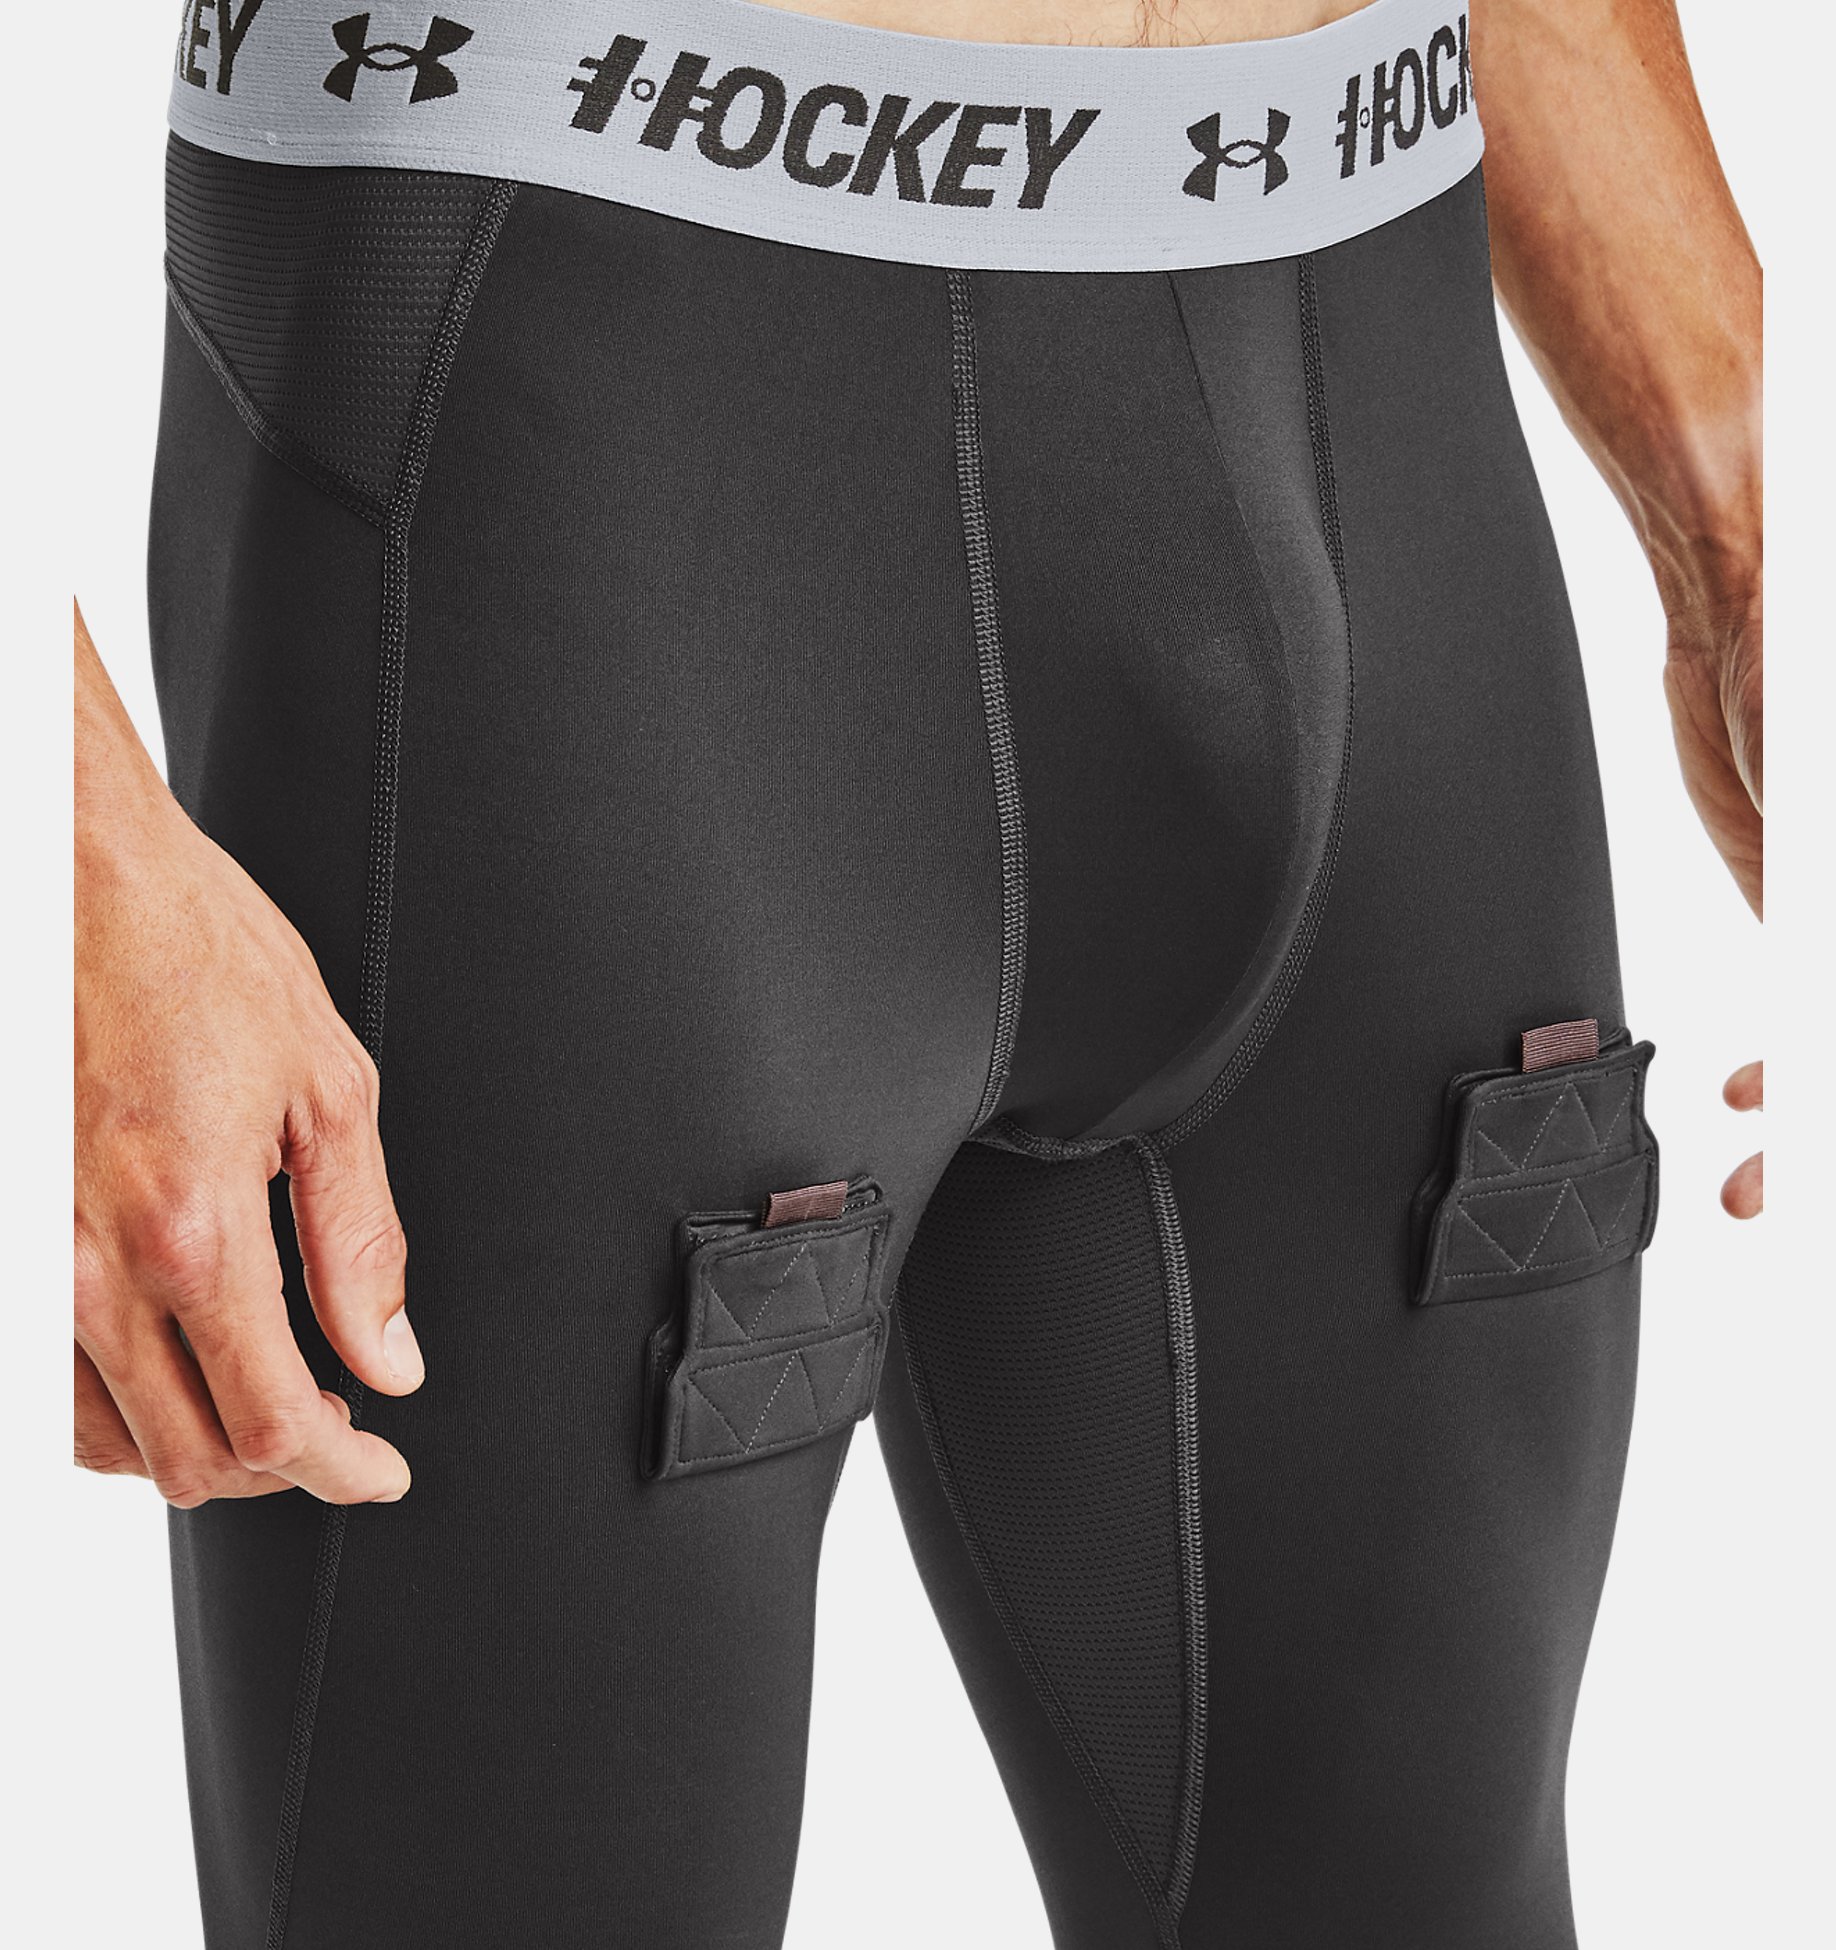 Men's UA Hockey Compression Leggings